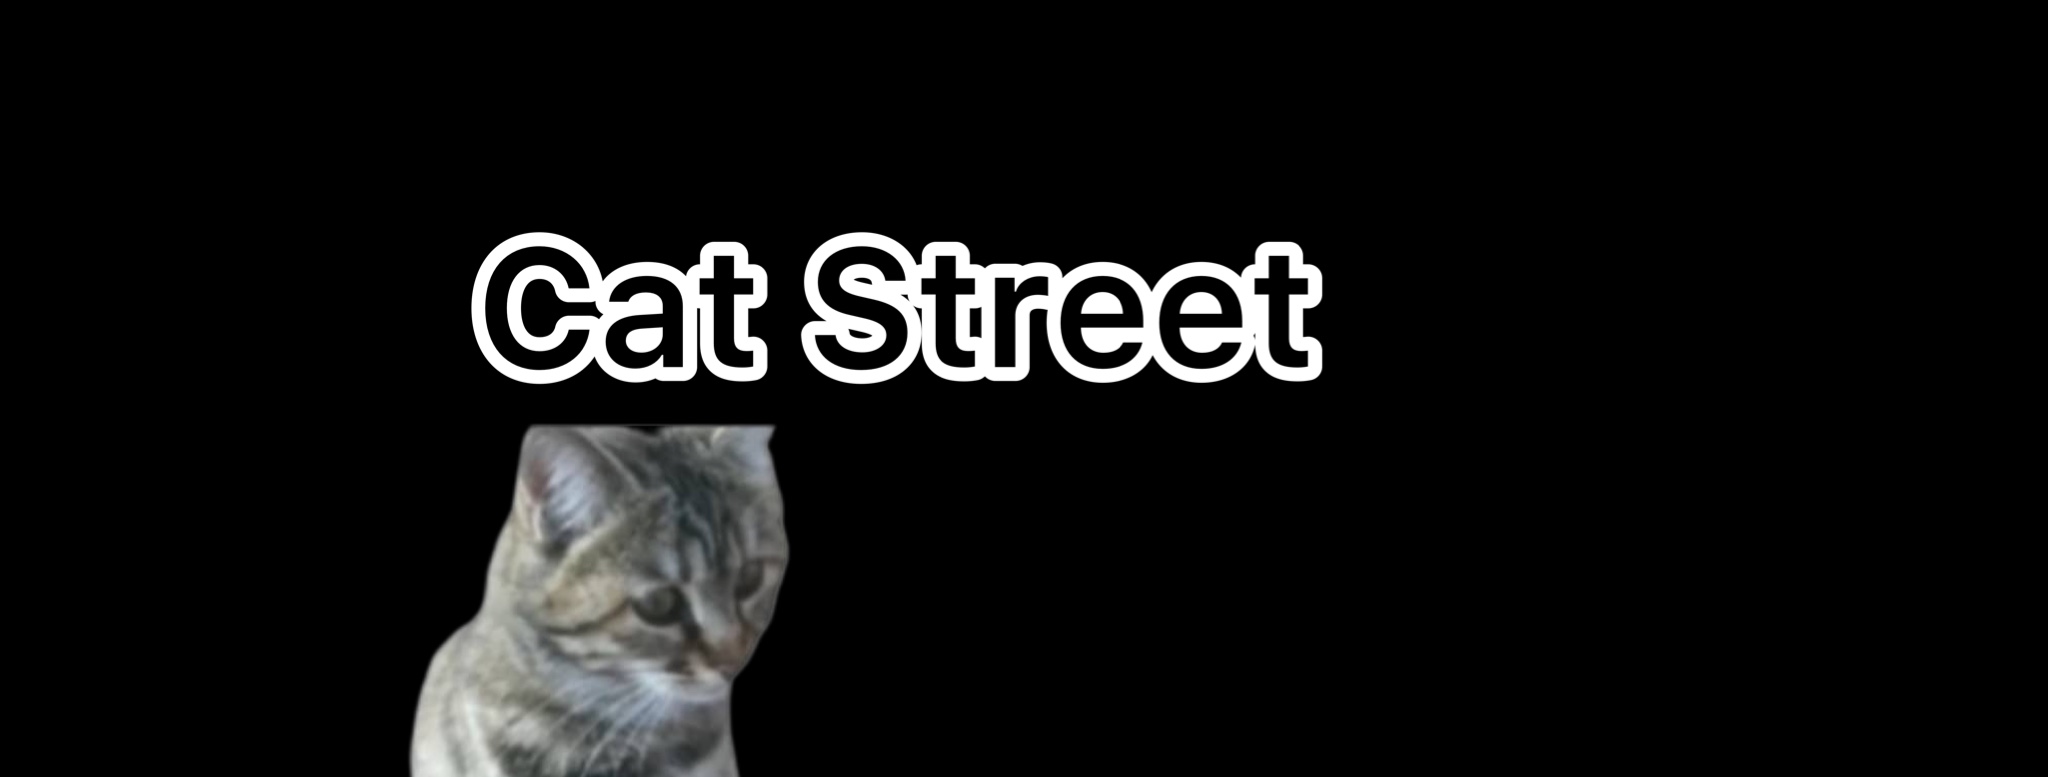 Cat Street